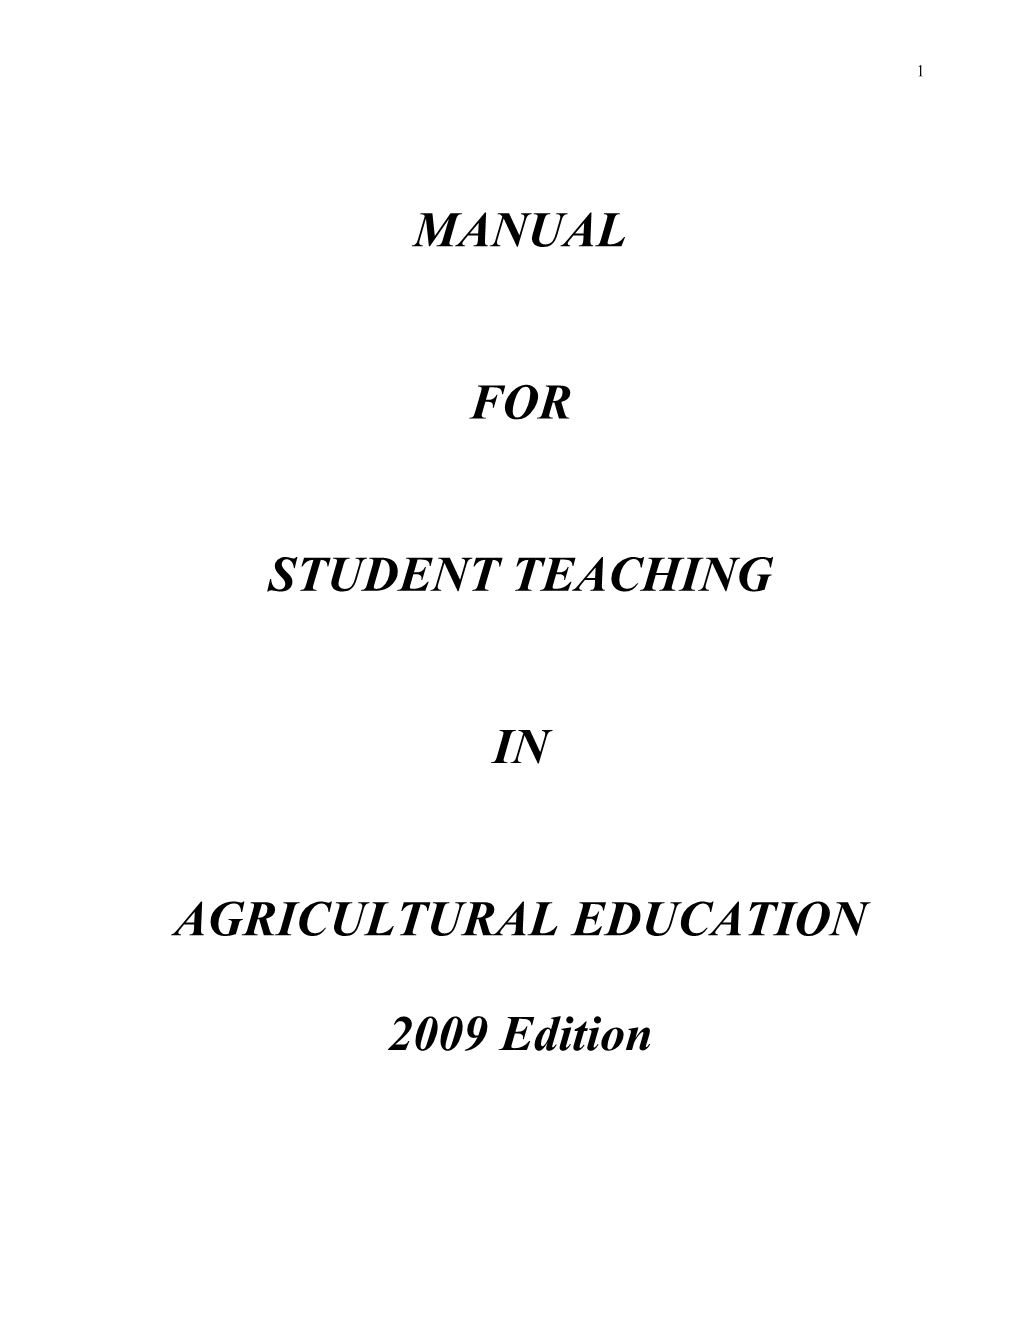 Student Teaching Manual